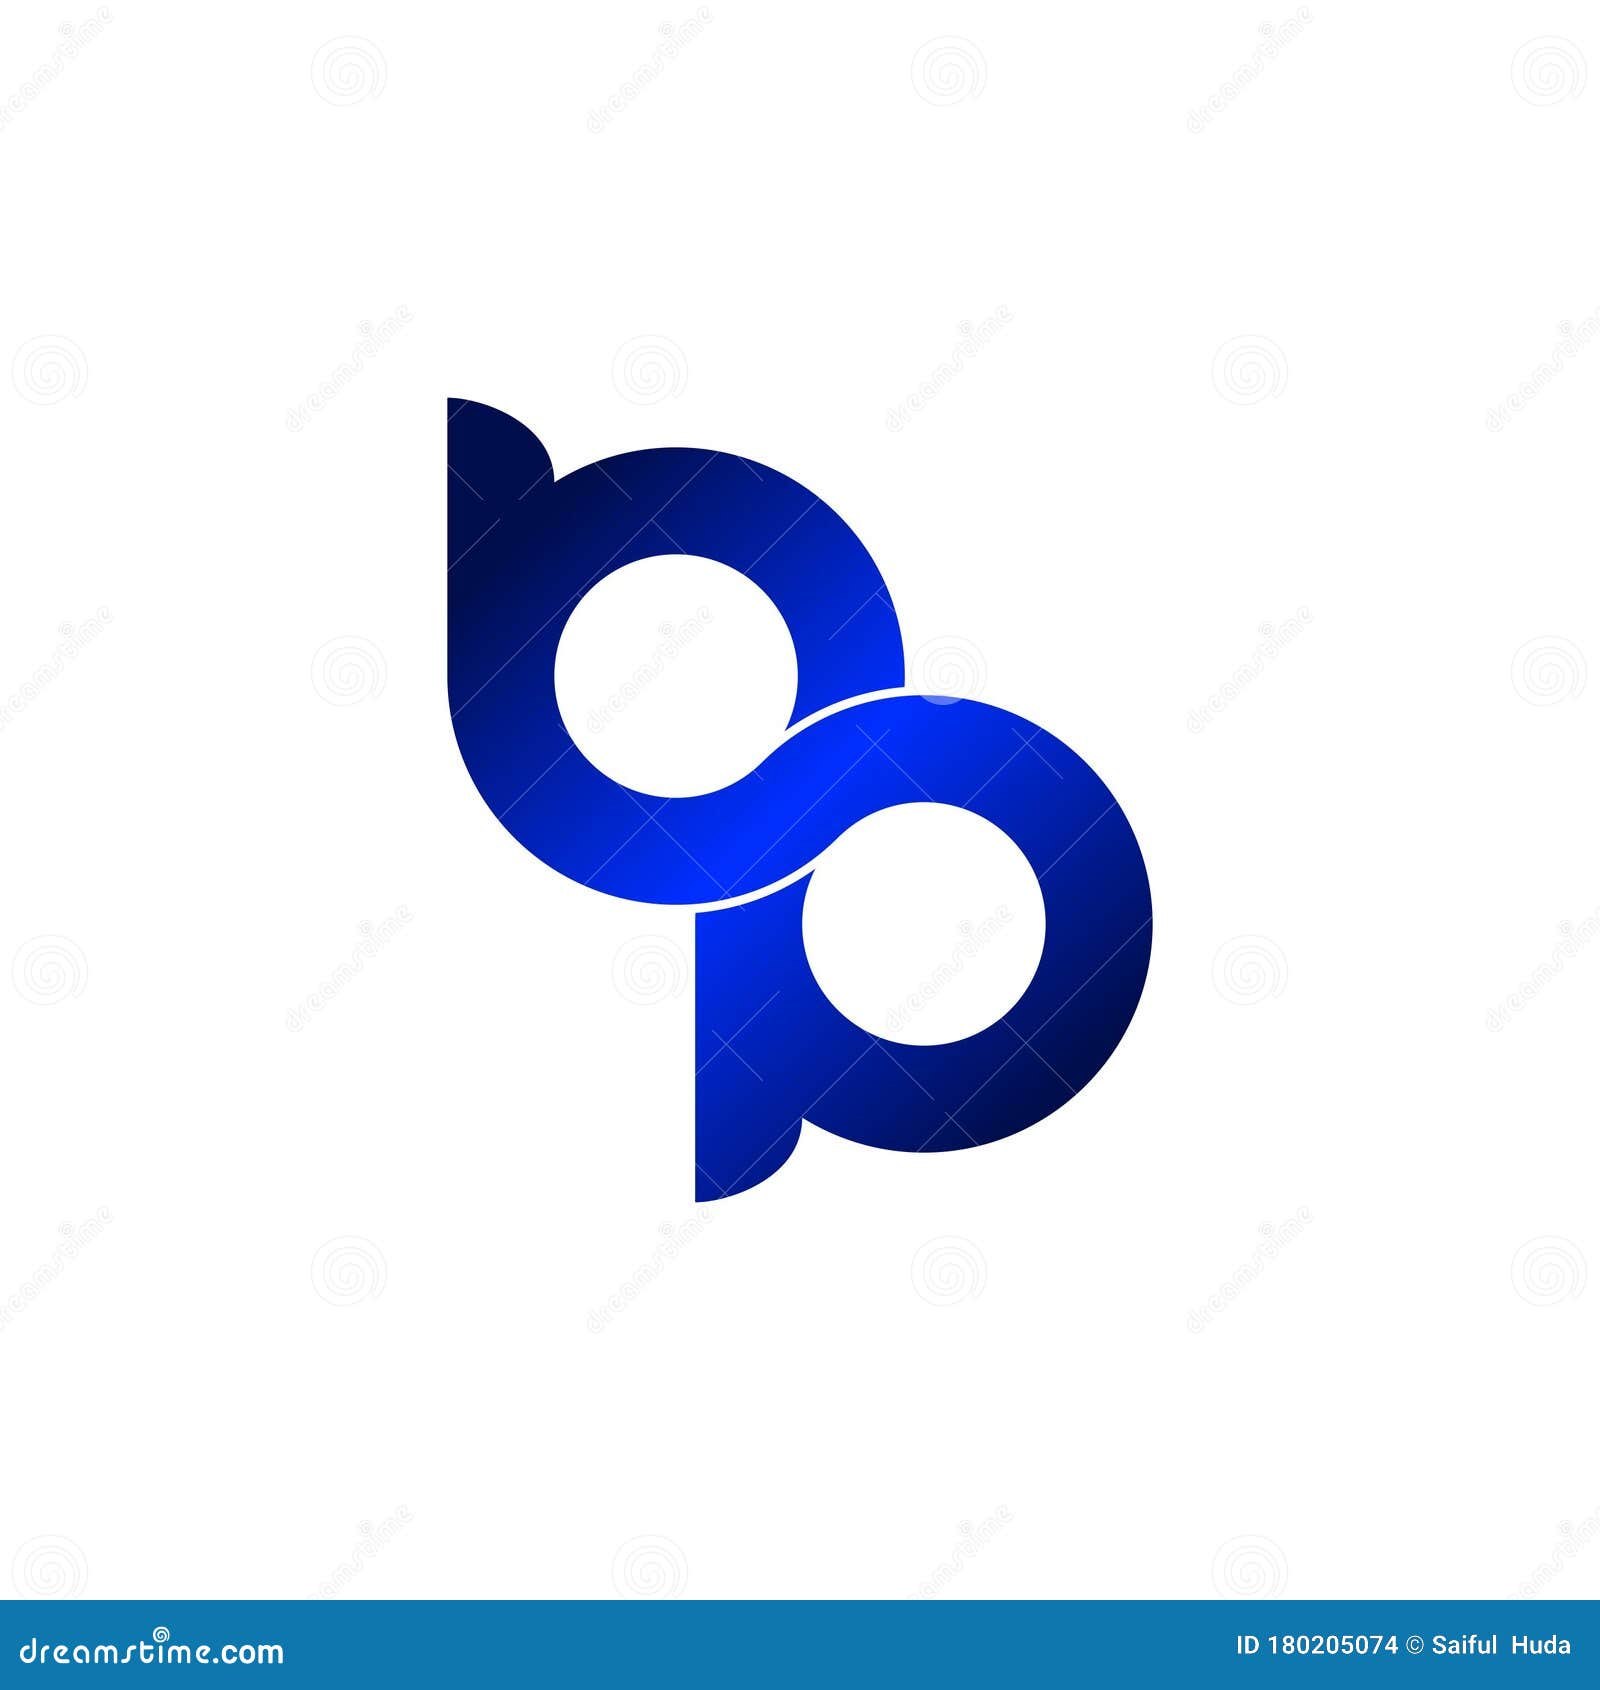 Letter BP Logo or Icon Design Vector Image Template - MasterBundles